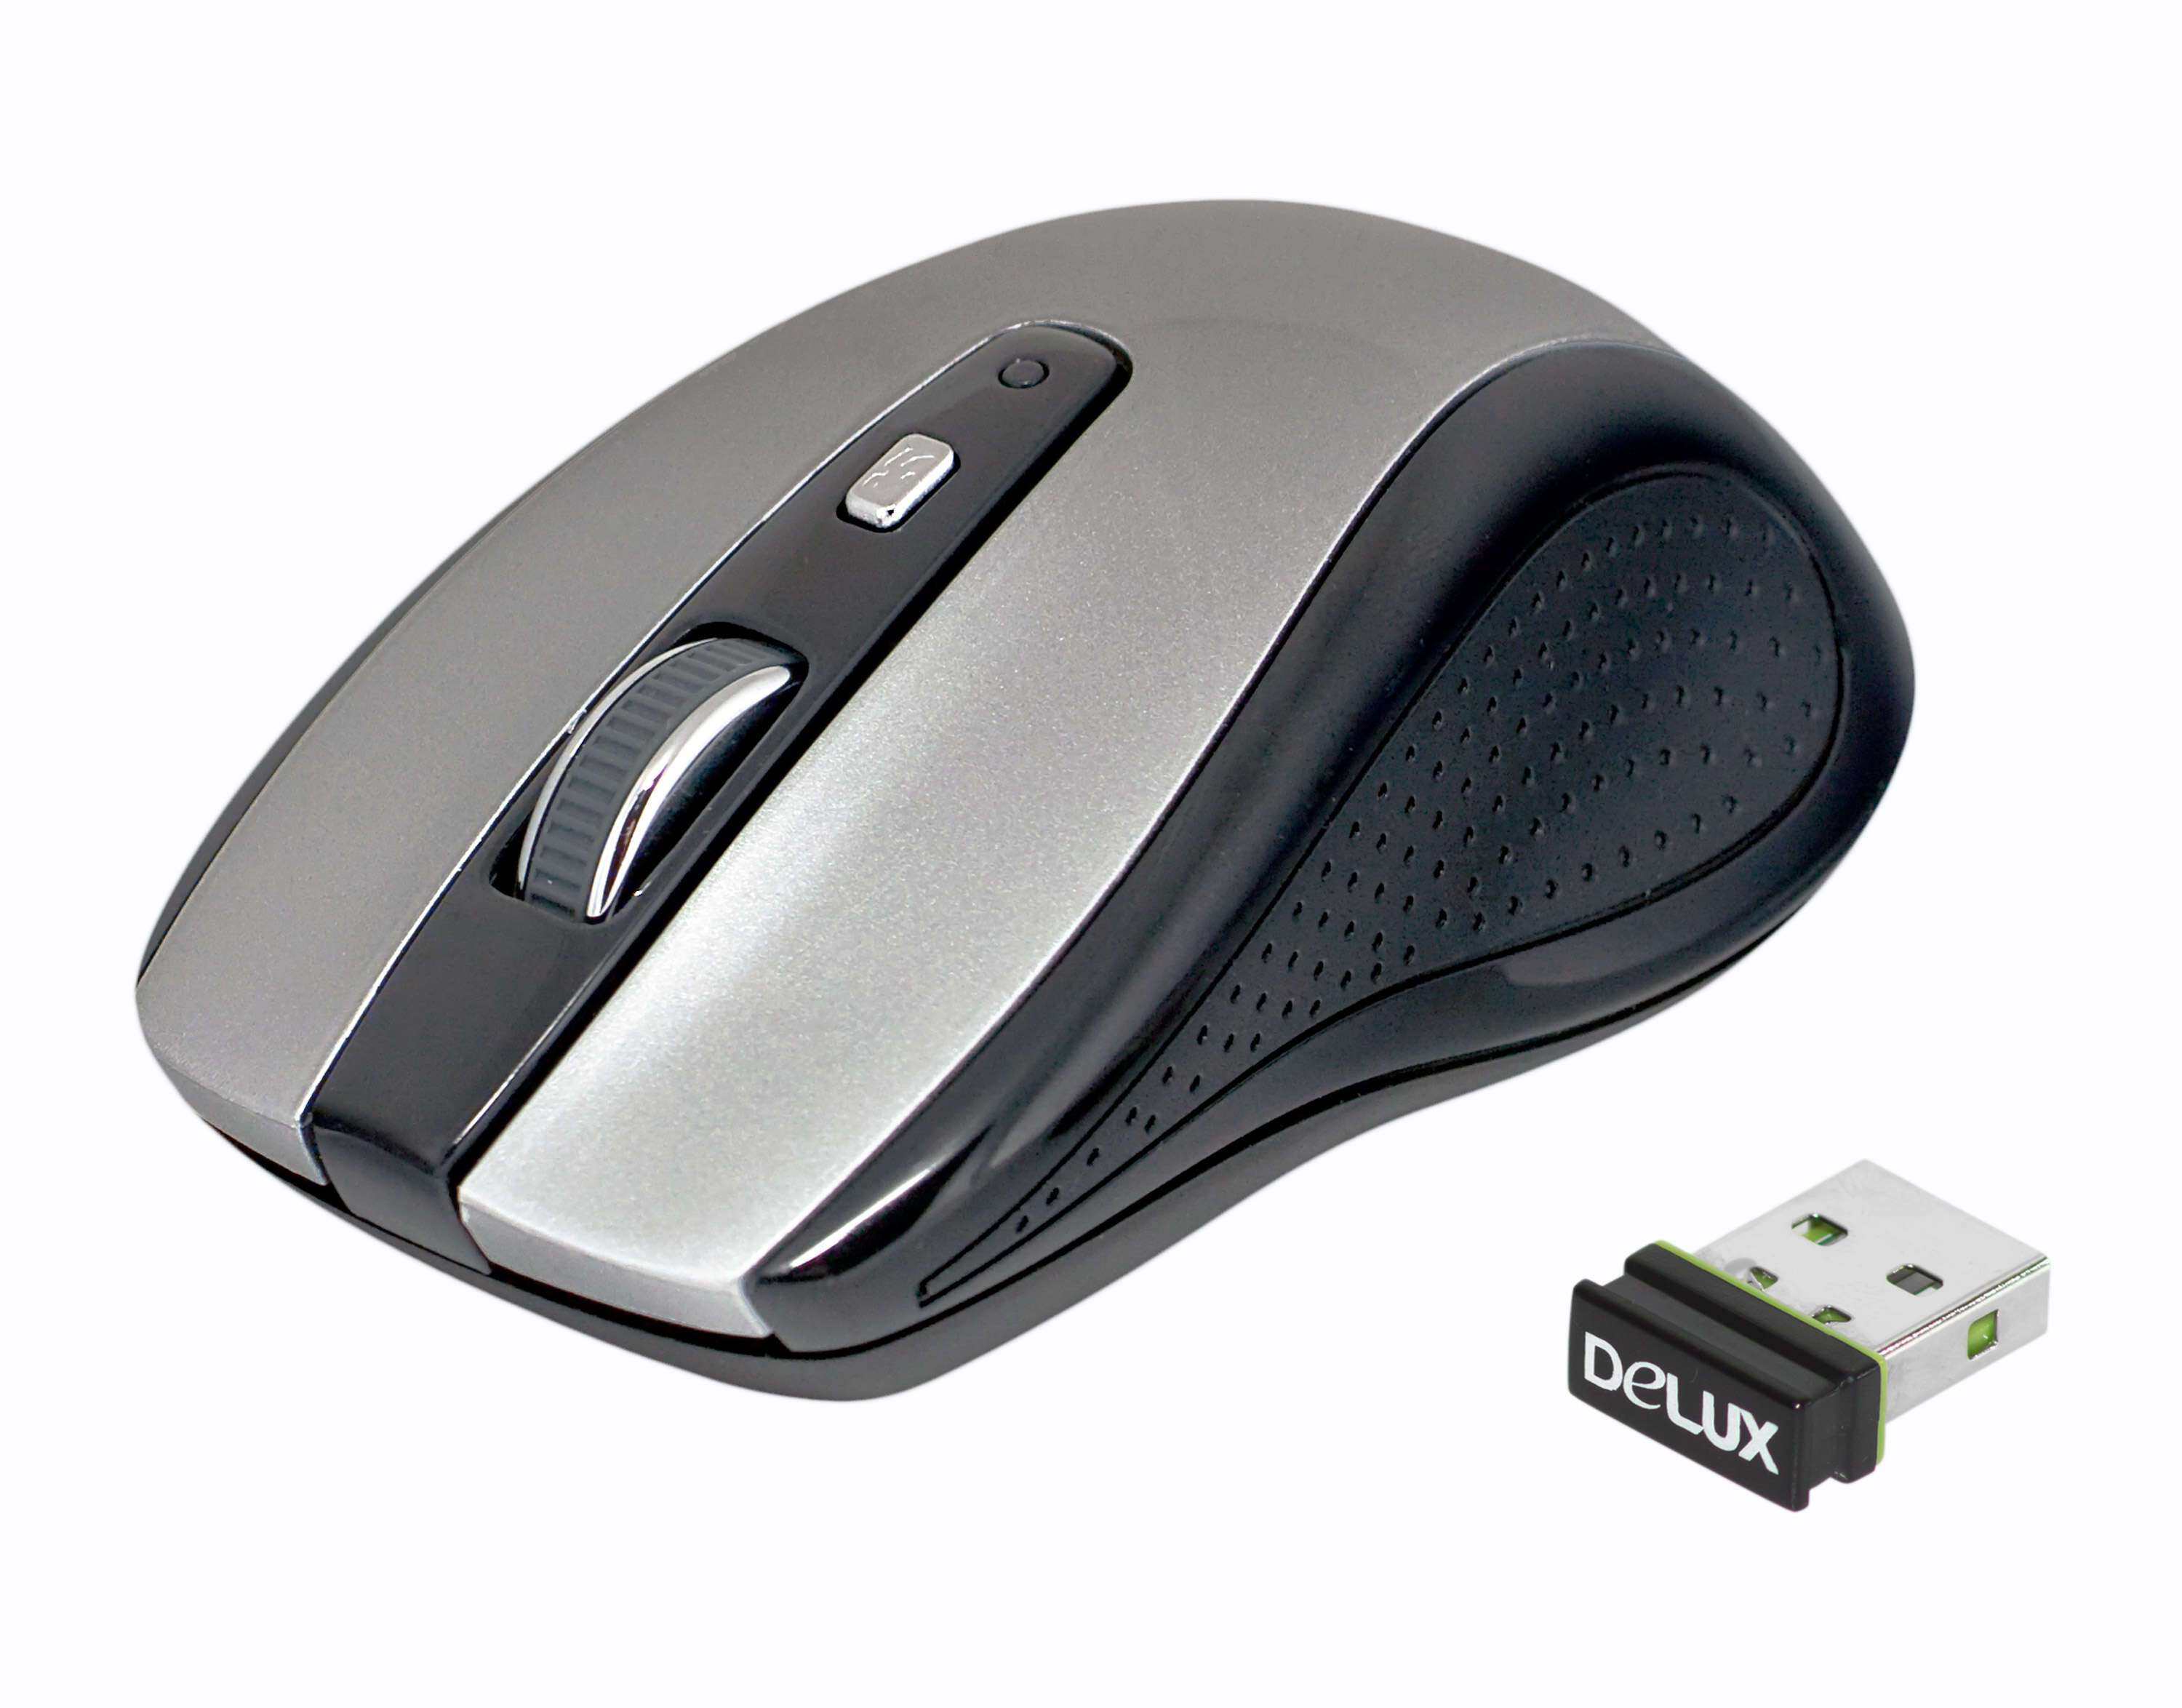 Беспроводная мышь характеристика. Мышь Delux dlm-486gl Silver-Black USB. Mouse Delux m105gx-g07uf Wireless. Mouse Delux m107gx+g07uf Wireless. Мышь Samsung MLC-610b Wireless Laser Mouse Black-Silver USB.